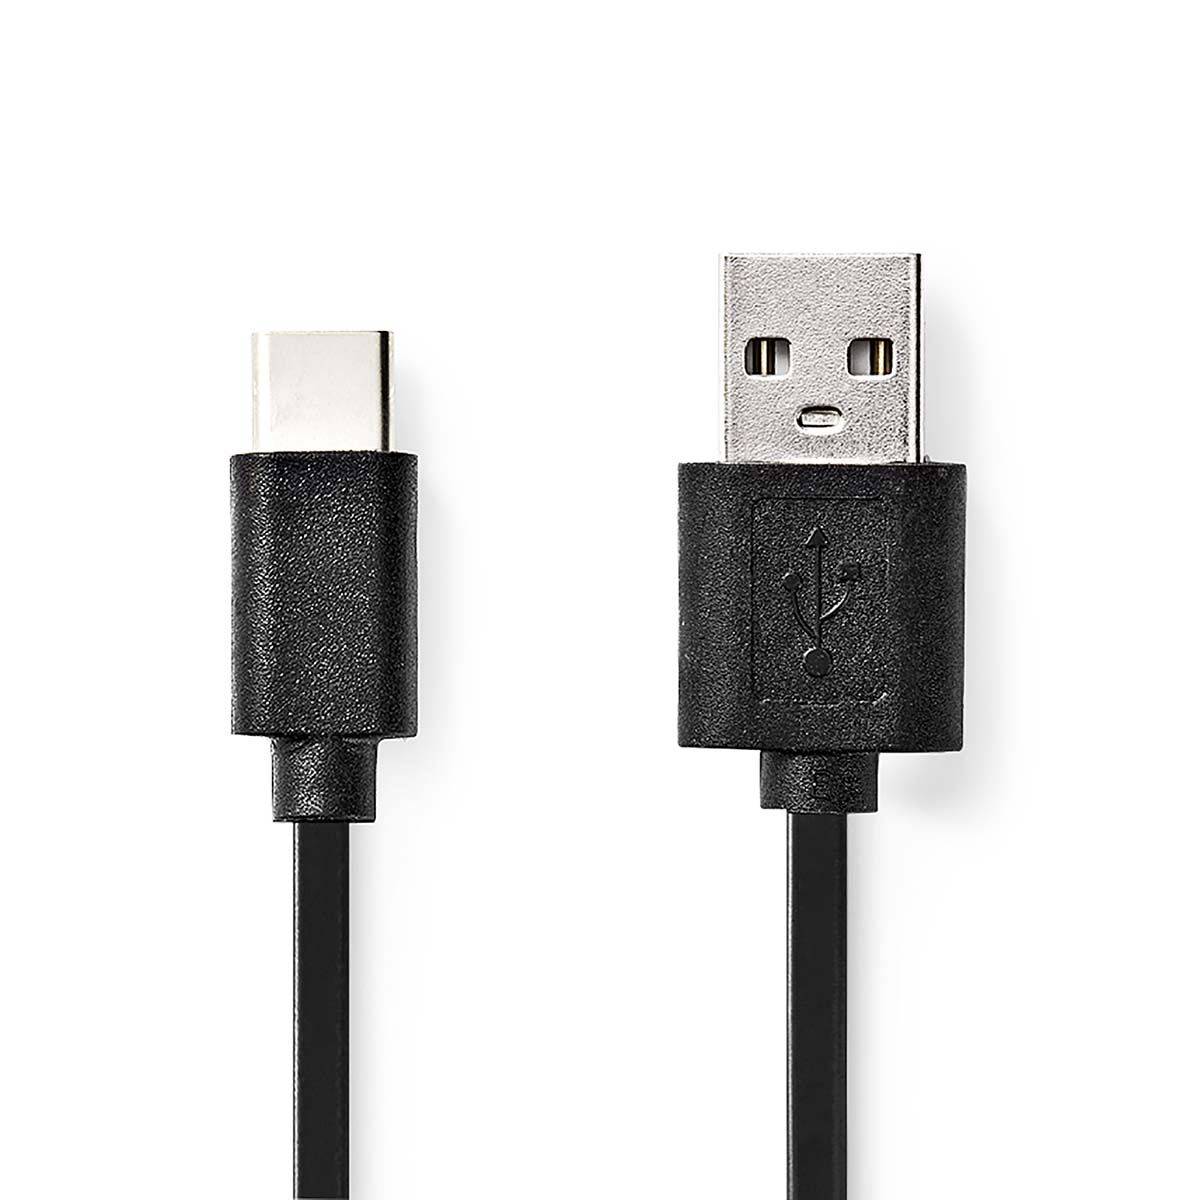 Nedis USB 2.0 kabel, C Male - A Male, 2m, zwart CCGB60600BK20